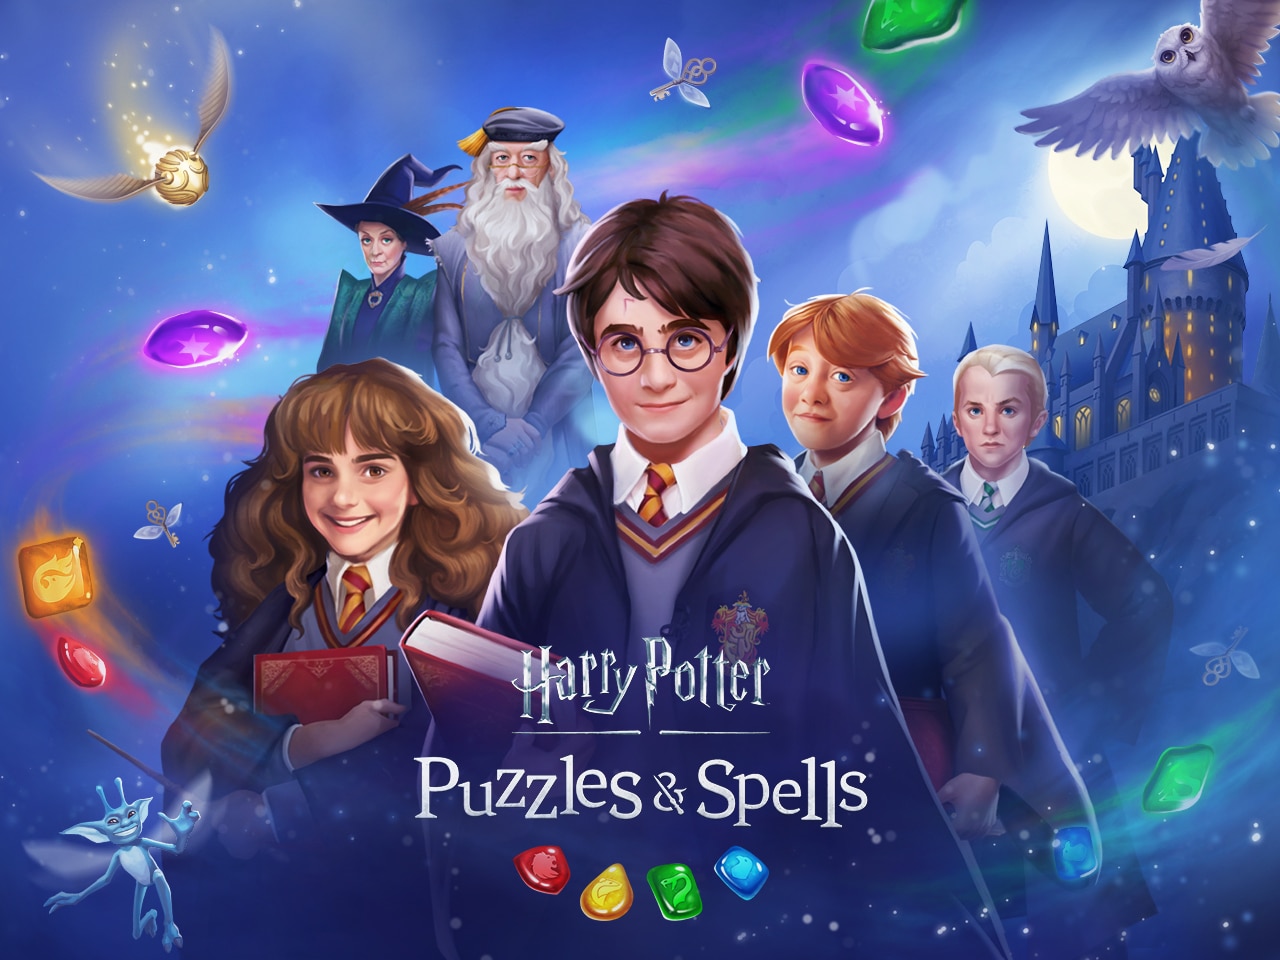 Aprendendo o feitiço RICTUSEMPRA  Harry Potter Hogwarts Mystery #08 